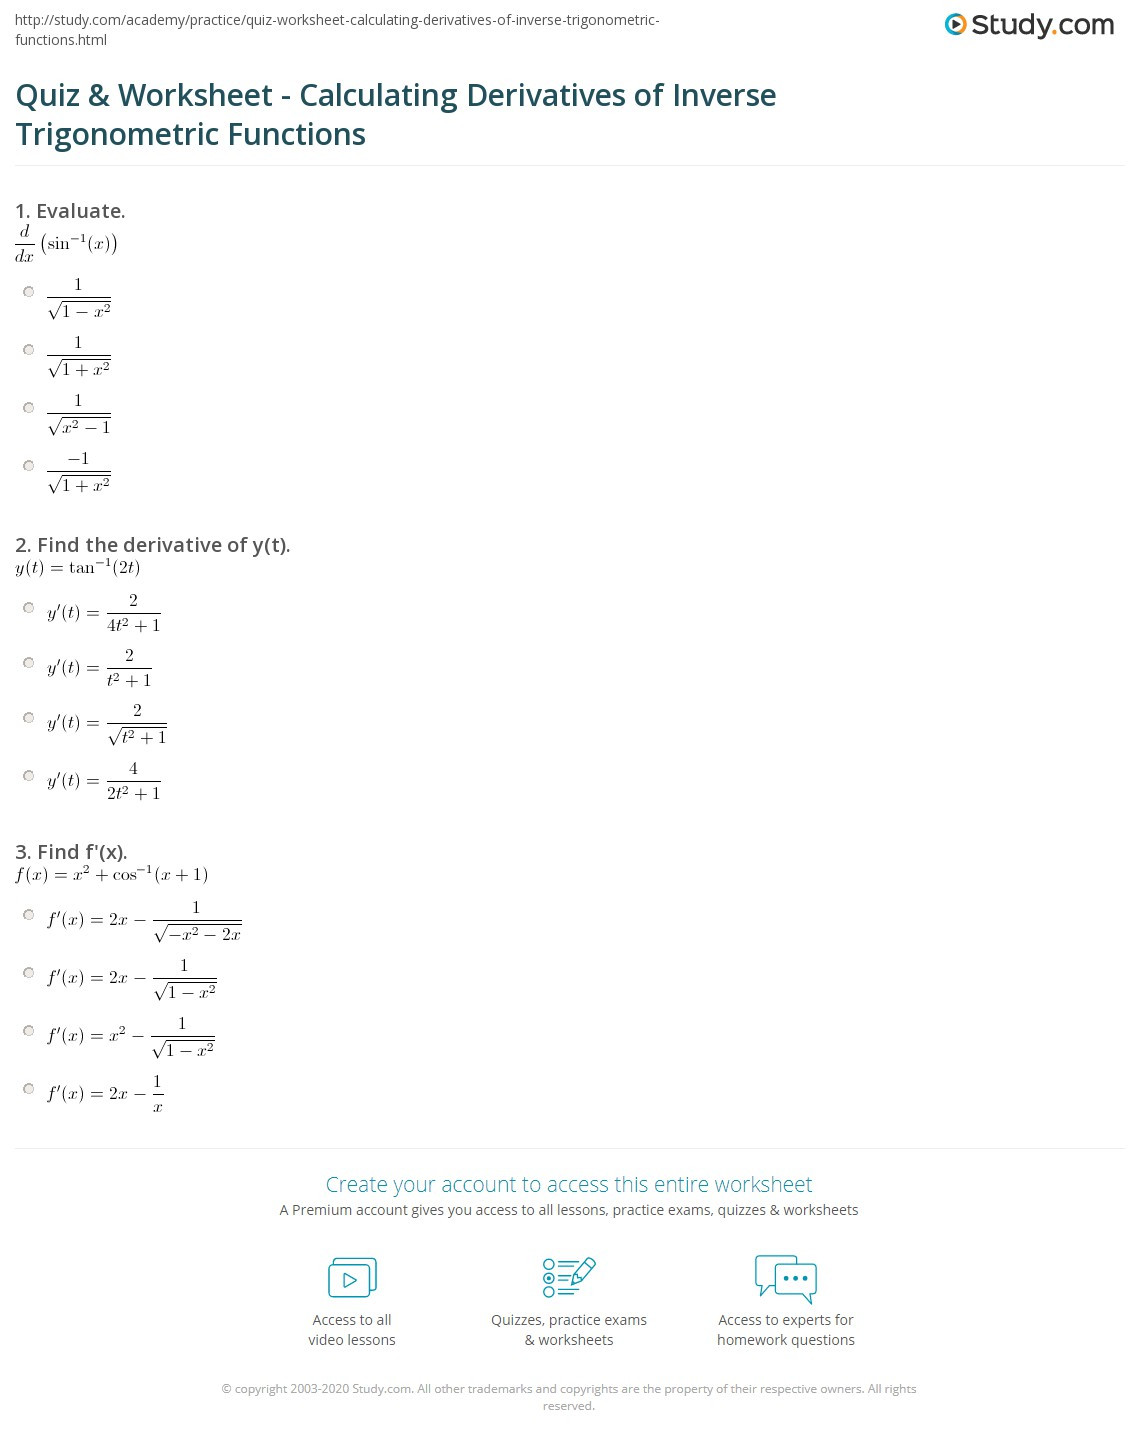 Inverse Trigonometric Functions Worksheet Quiz &amp; Worksheet Calculating Derivatives Of Inverse